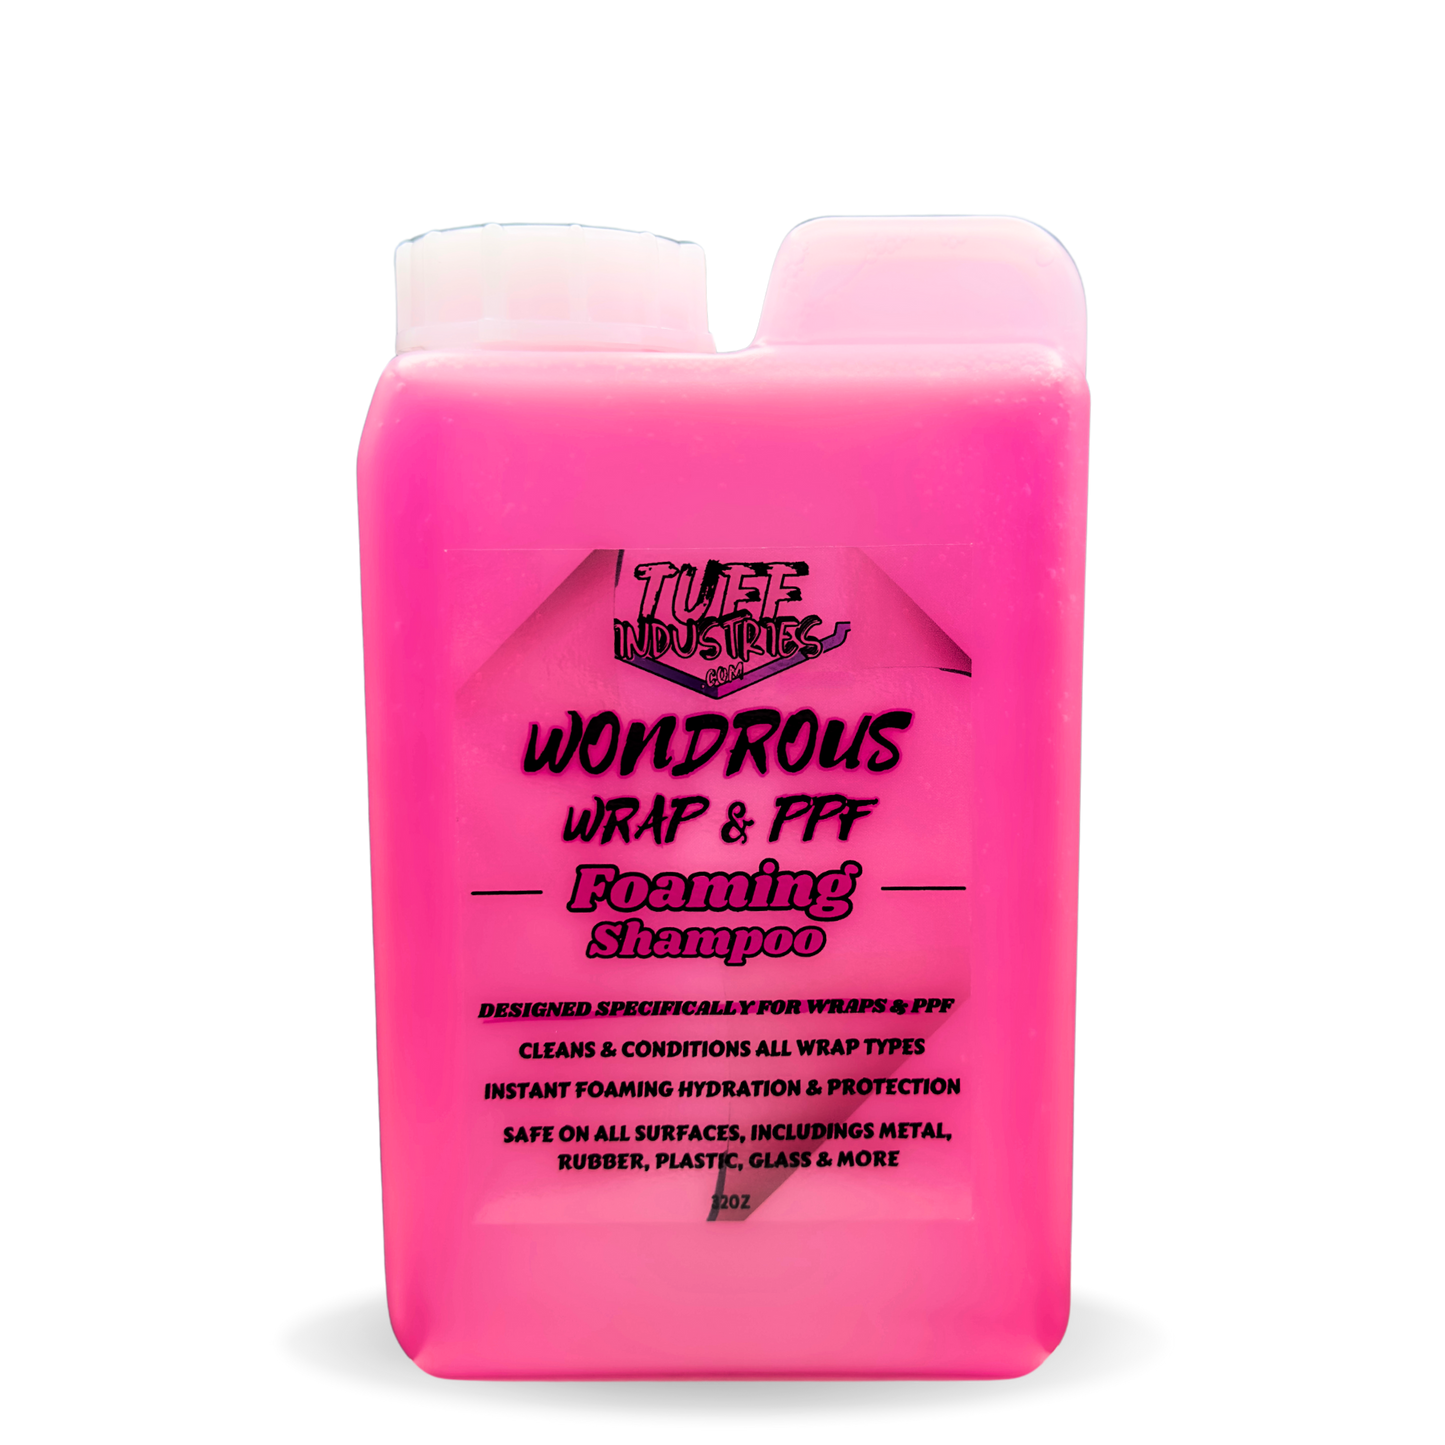 Wonderous Wrap & PPF Foaming Shampoo